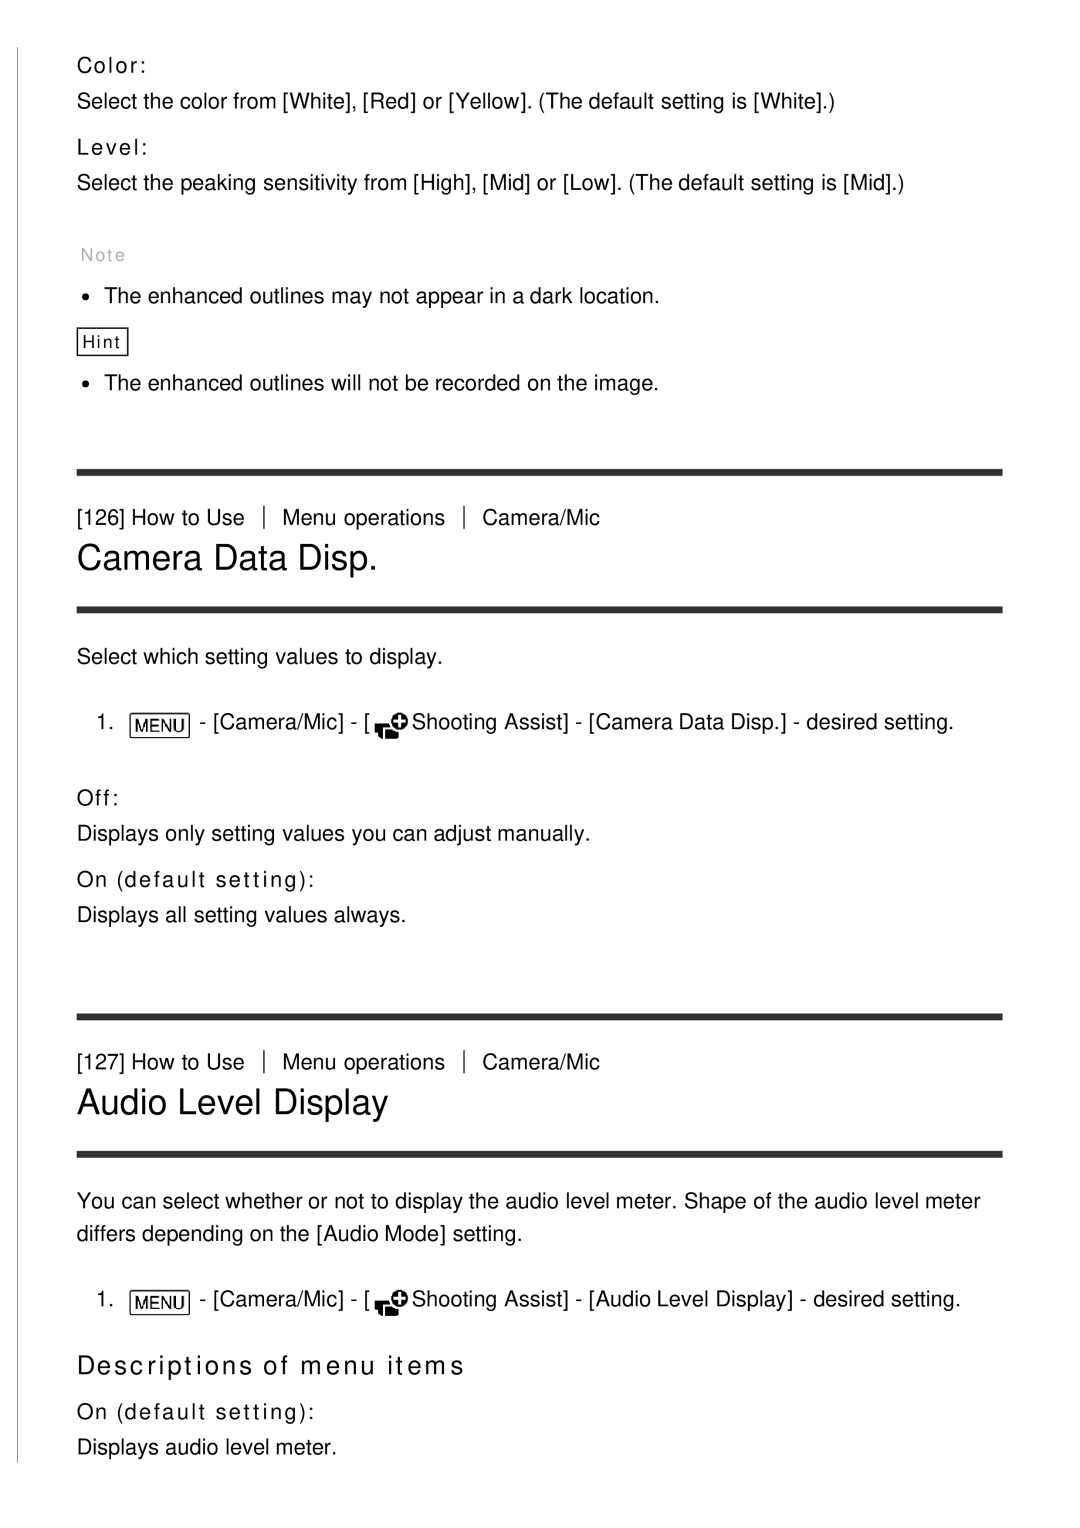 Sony HDR-CX900E, FDR-AX100 Camera Data Disp, Audio Level Display, Color, Descriptions of menu items, On default setting 